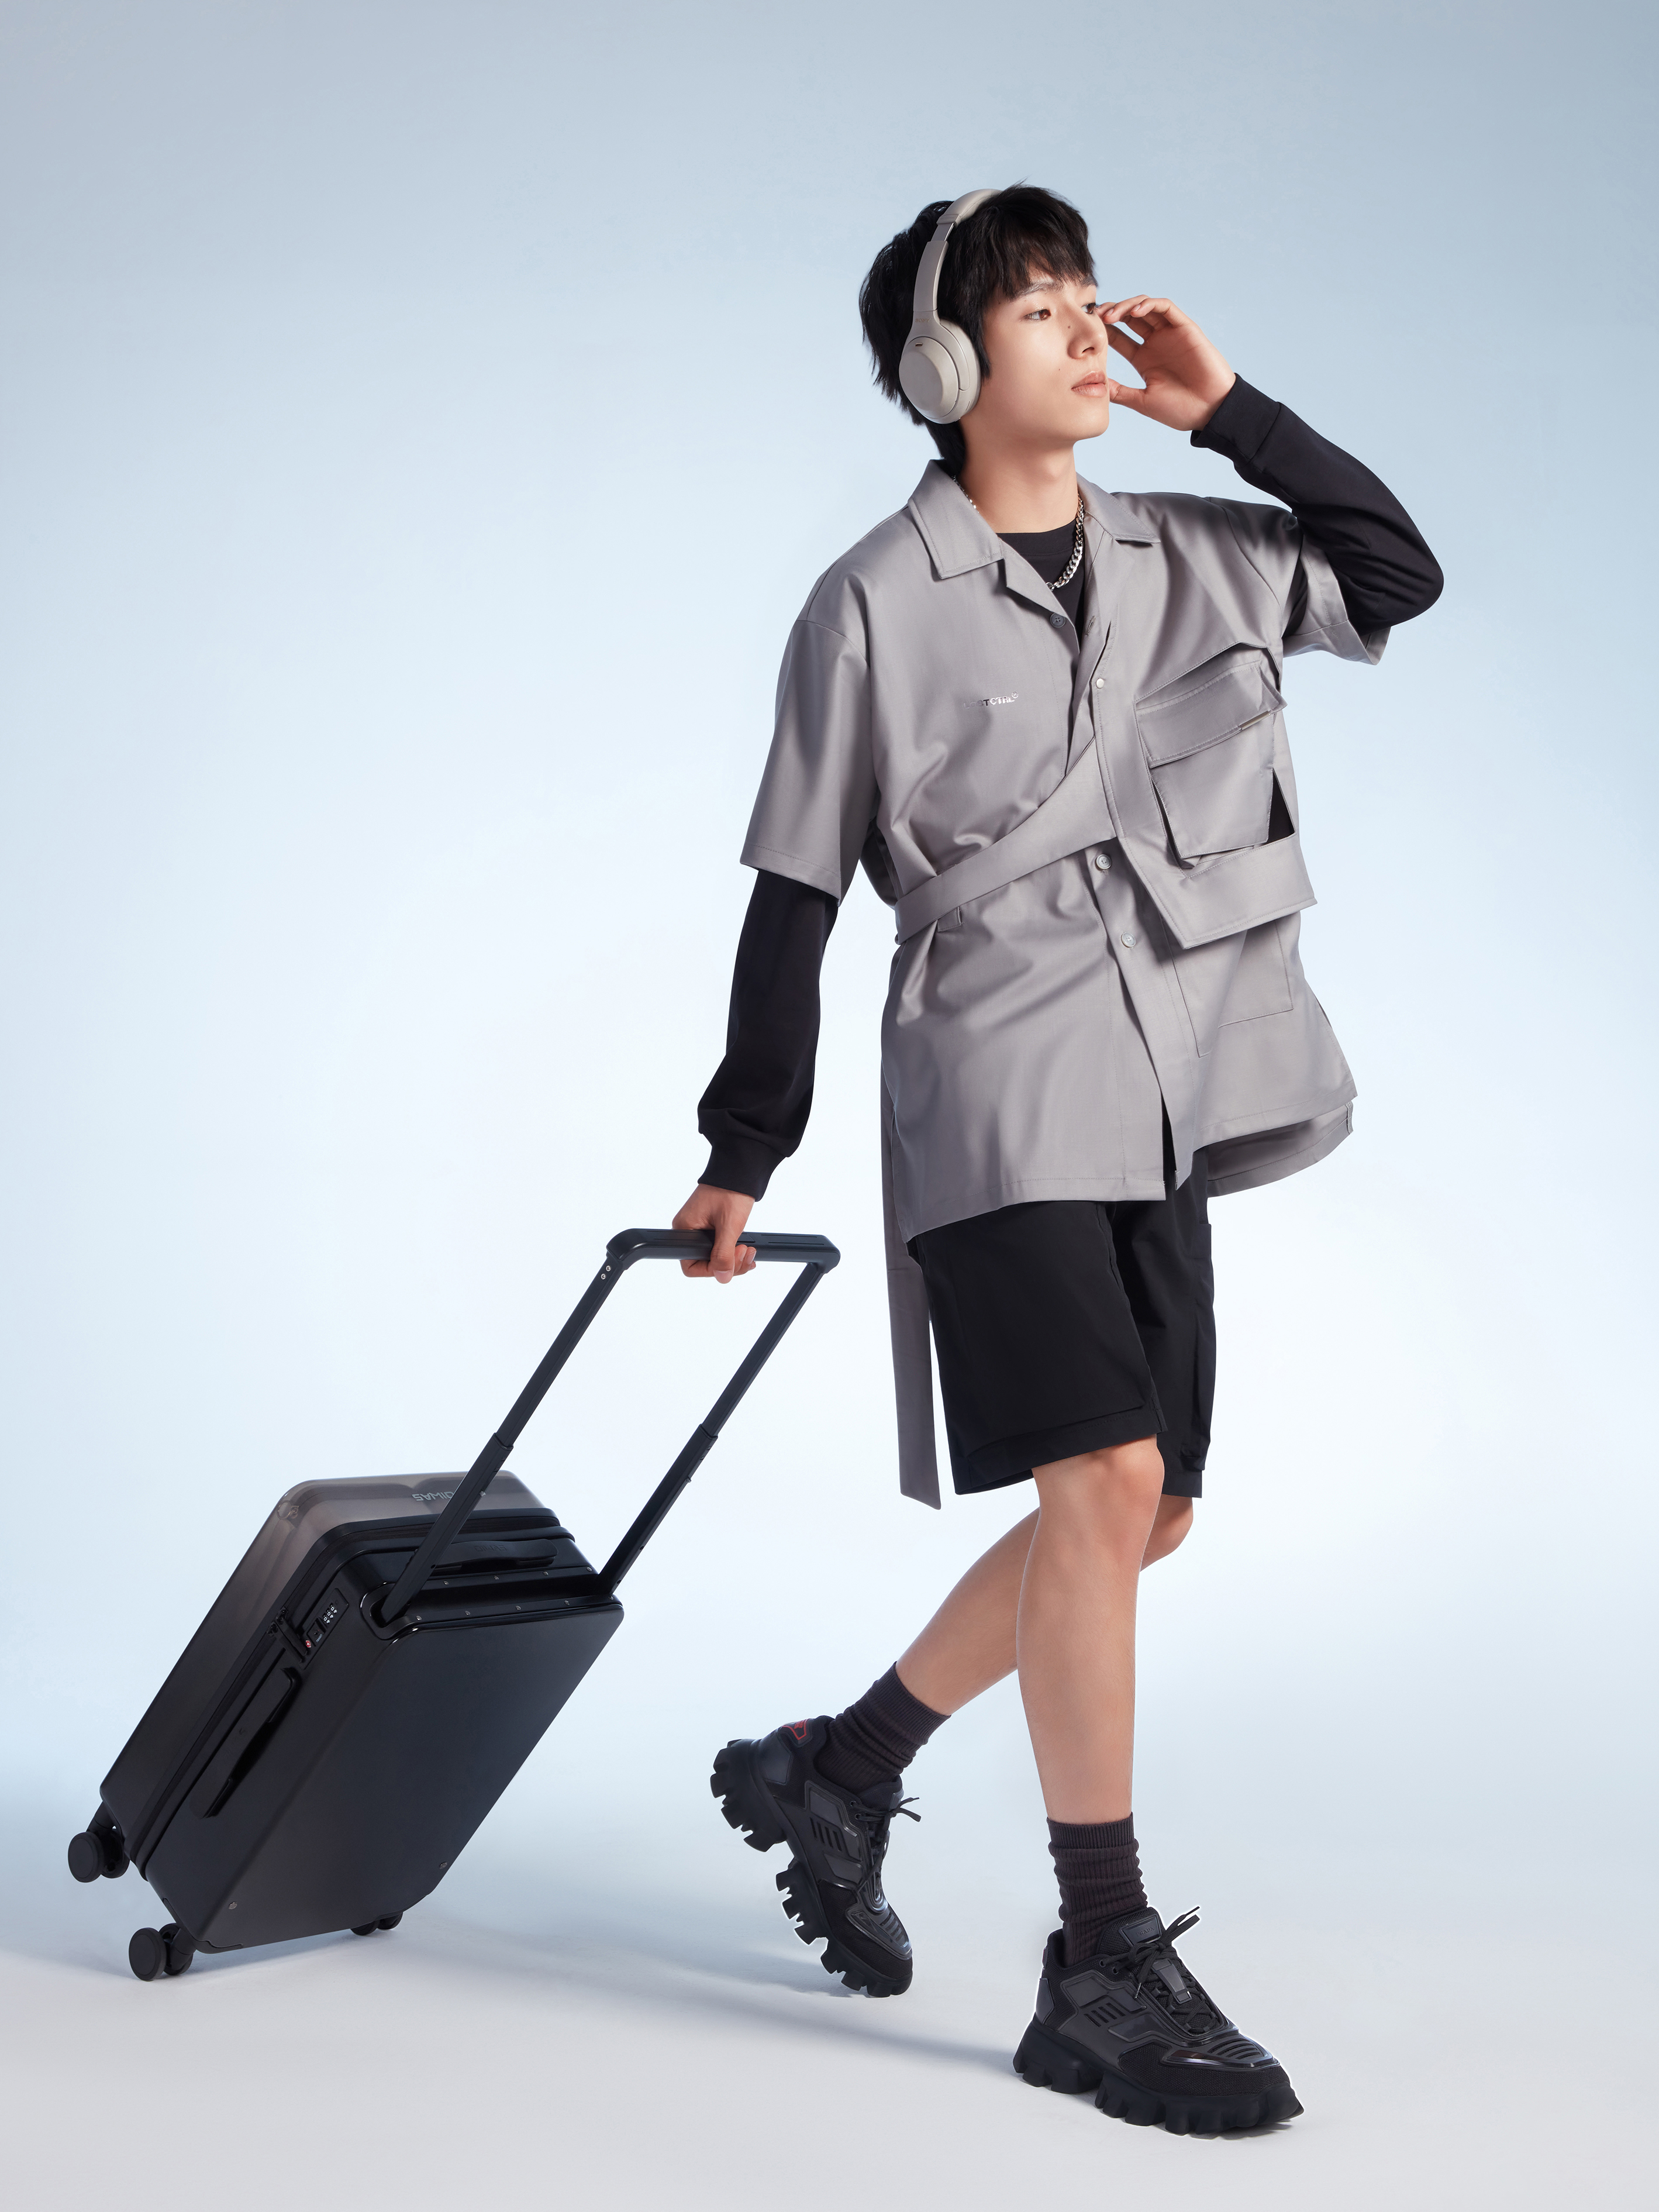 OIWAS X Carry-on Luggage